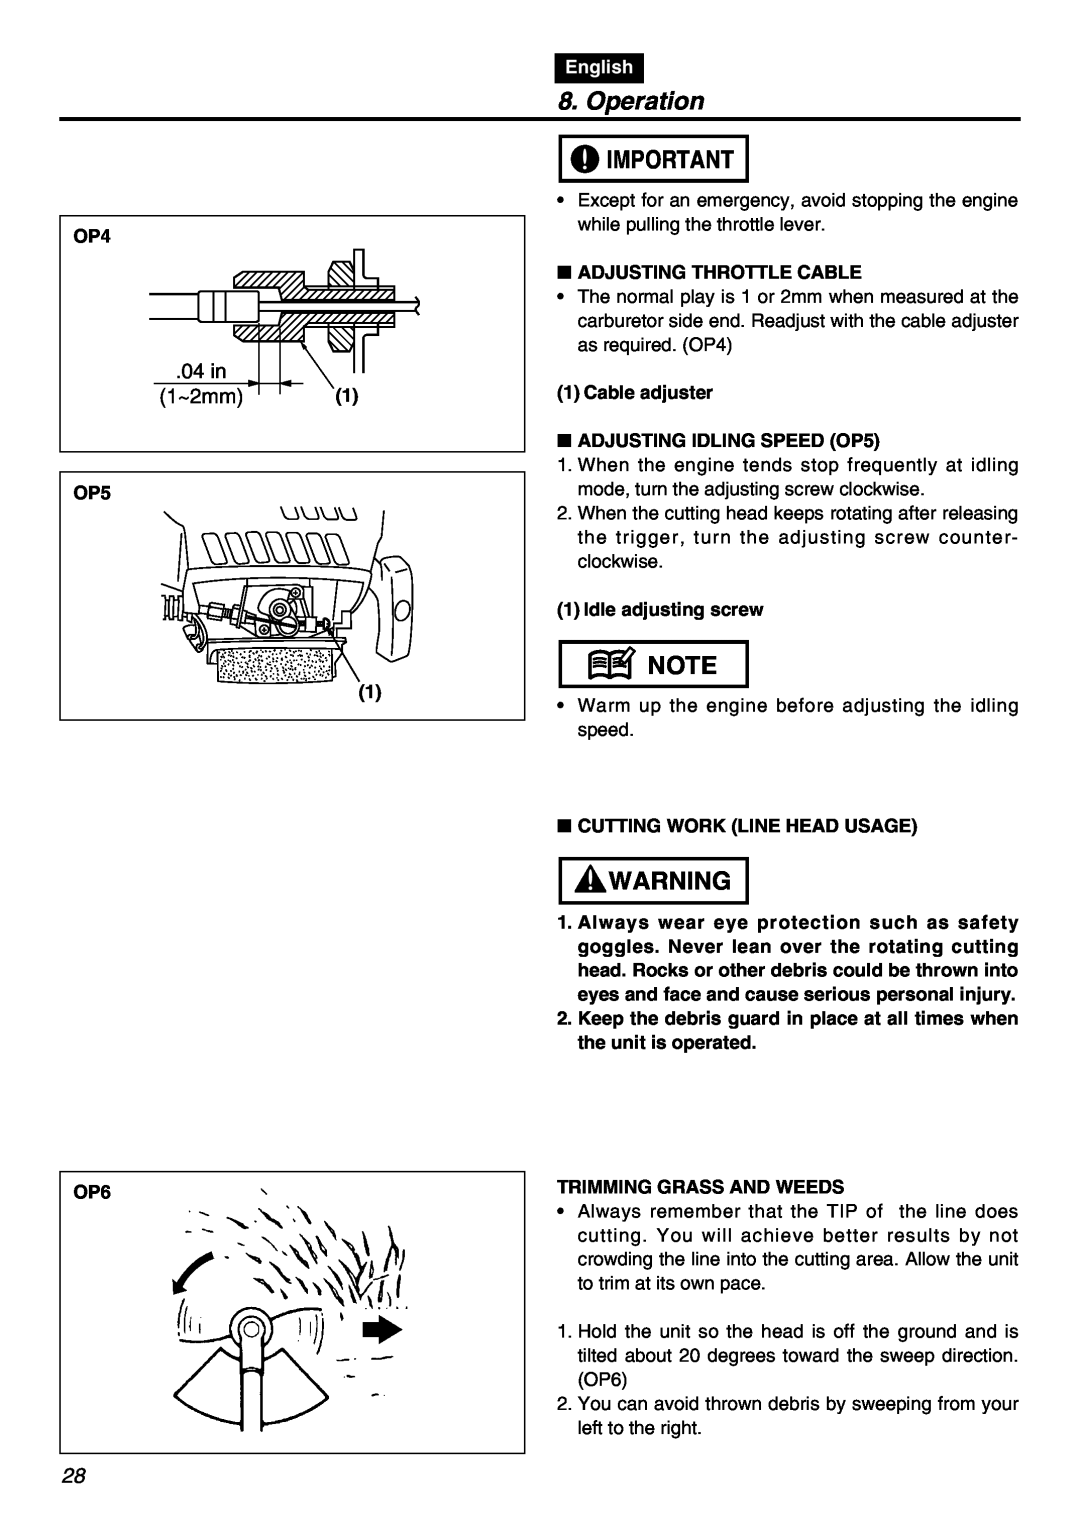 Zenoah TR2301S manual 04 in 1~2mm, Operation, English 